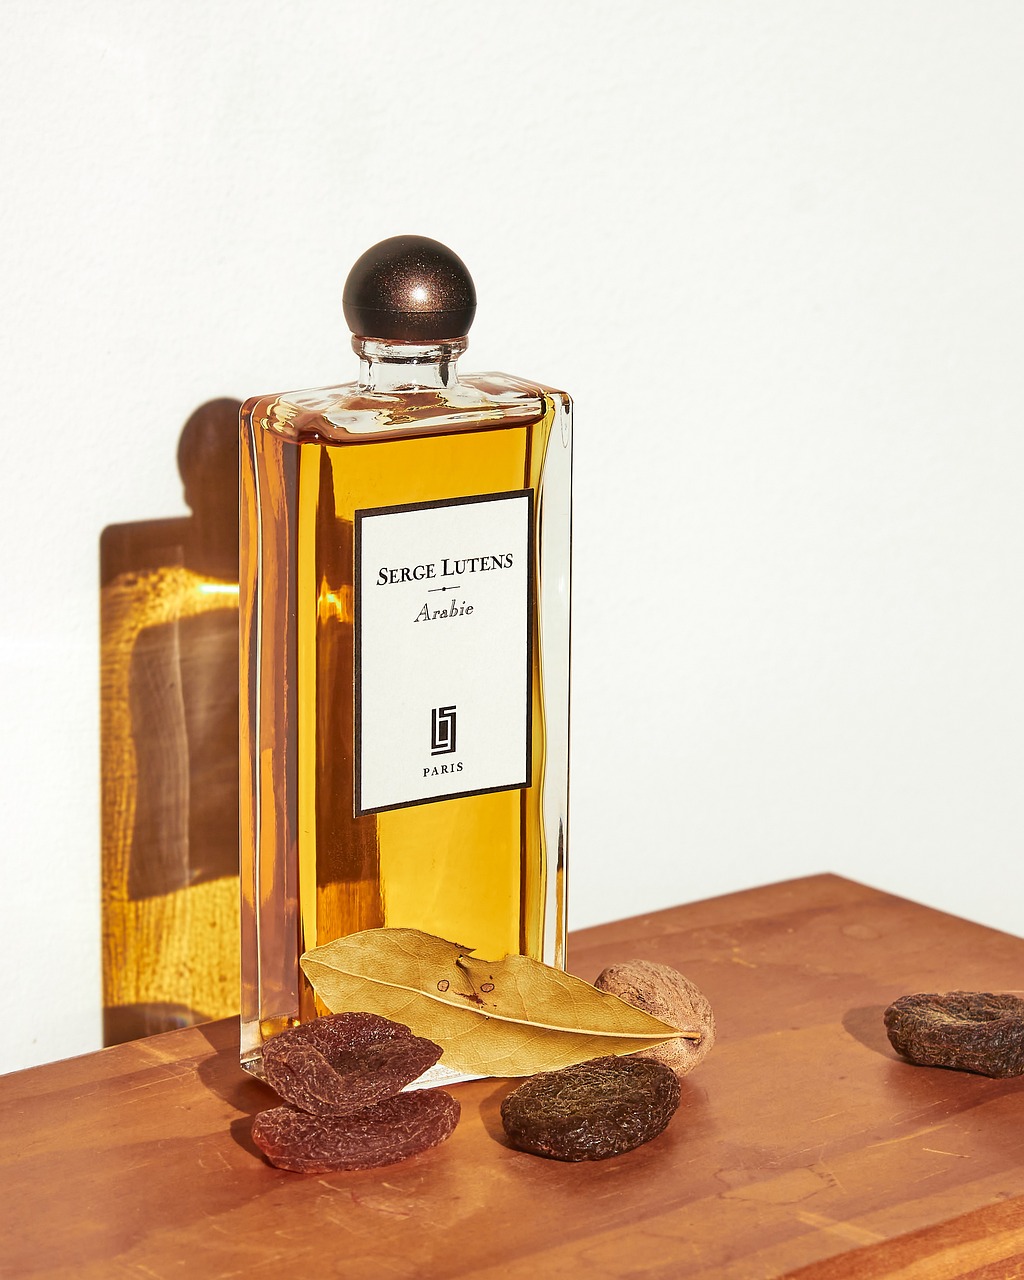 Websites to Buy original French Perfume